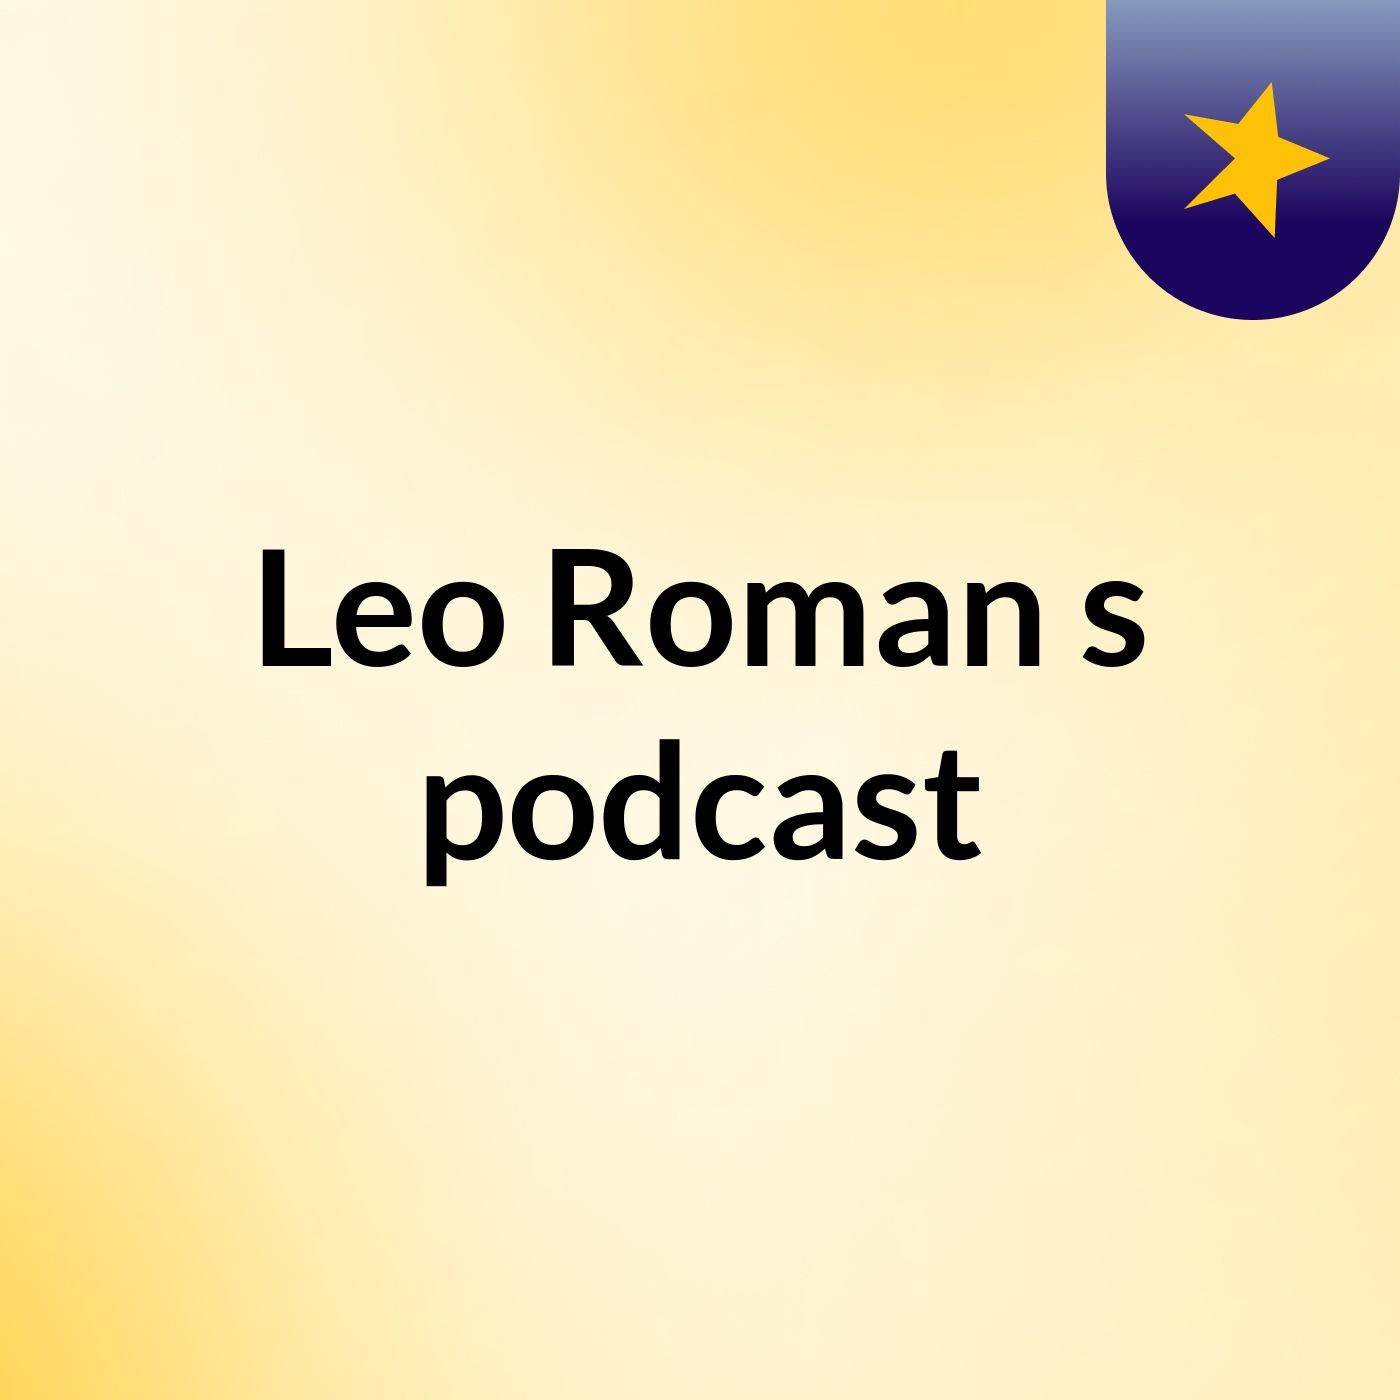 Episode 10 - Leo Roman's podcast